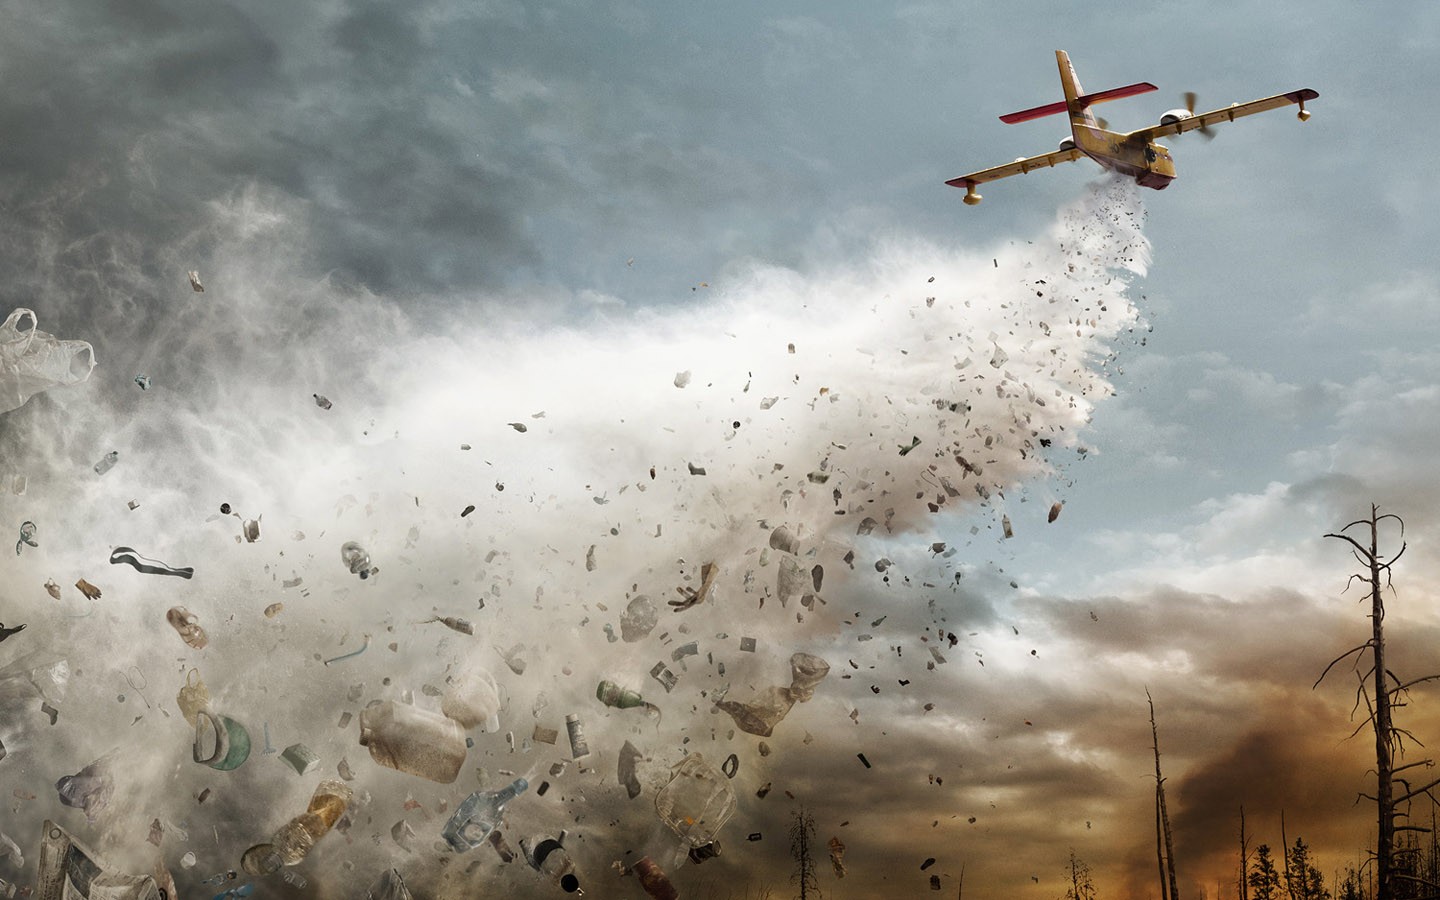 General 1440x900 vehicle aircraft flying artwork trash toxic pollution